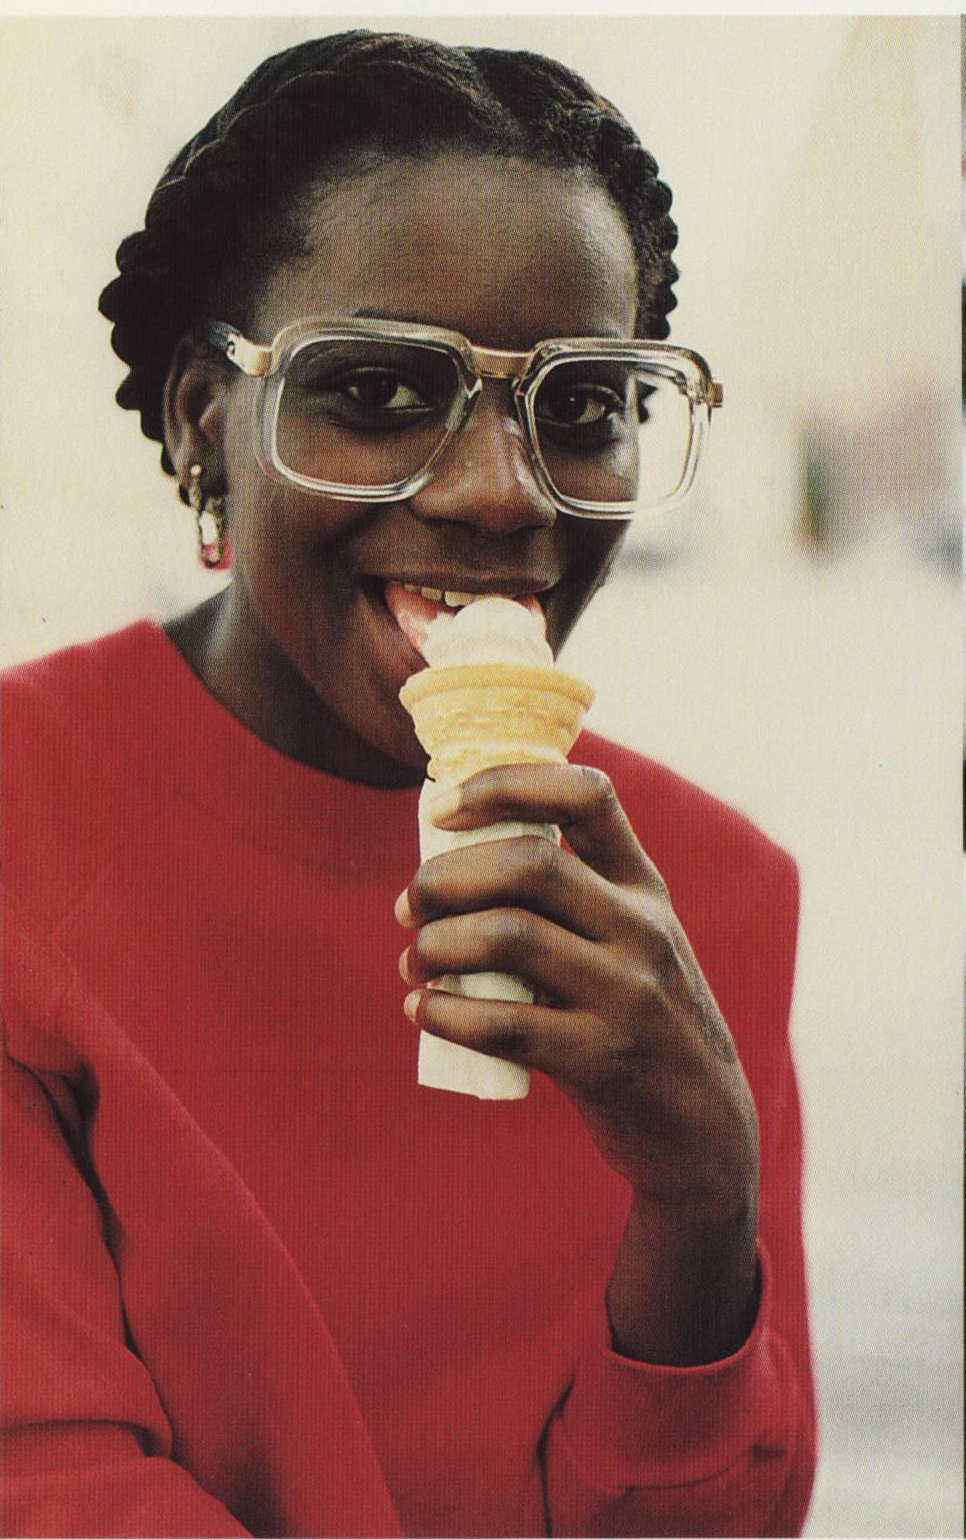 Clear Cazal 616s an ice cream cone and a smile. Photo by Jamel Shabazz. - Cazal-Girl-Ice-Cream-Jamel-Shabazz